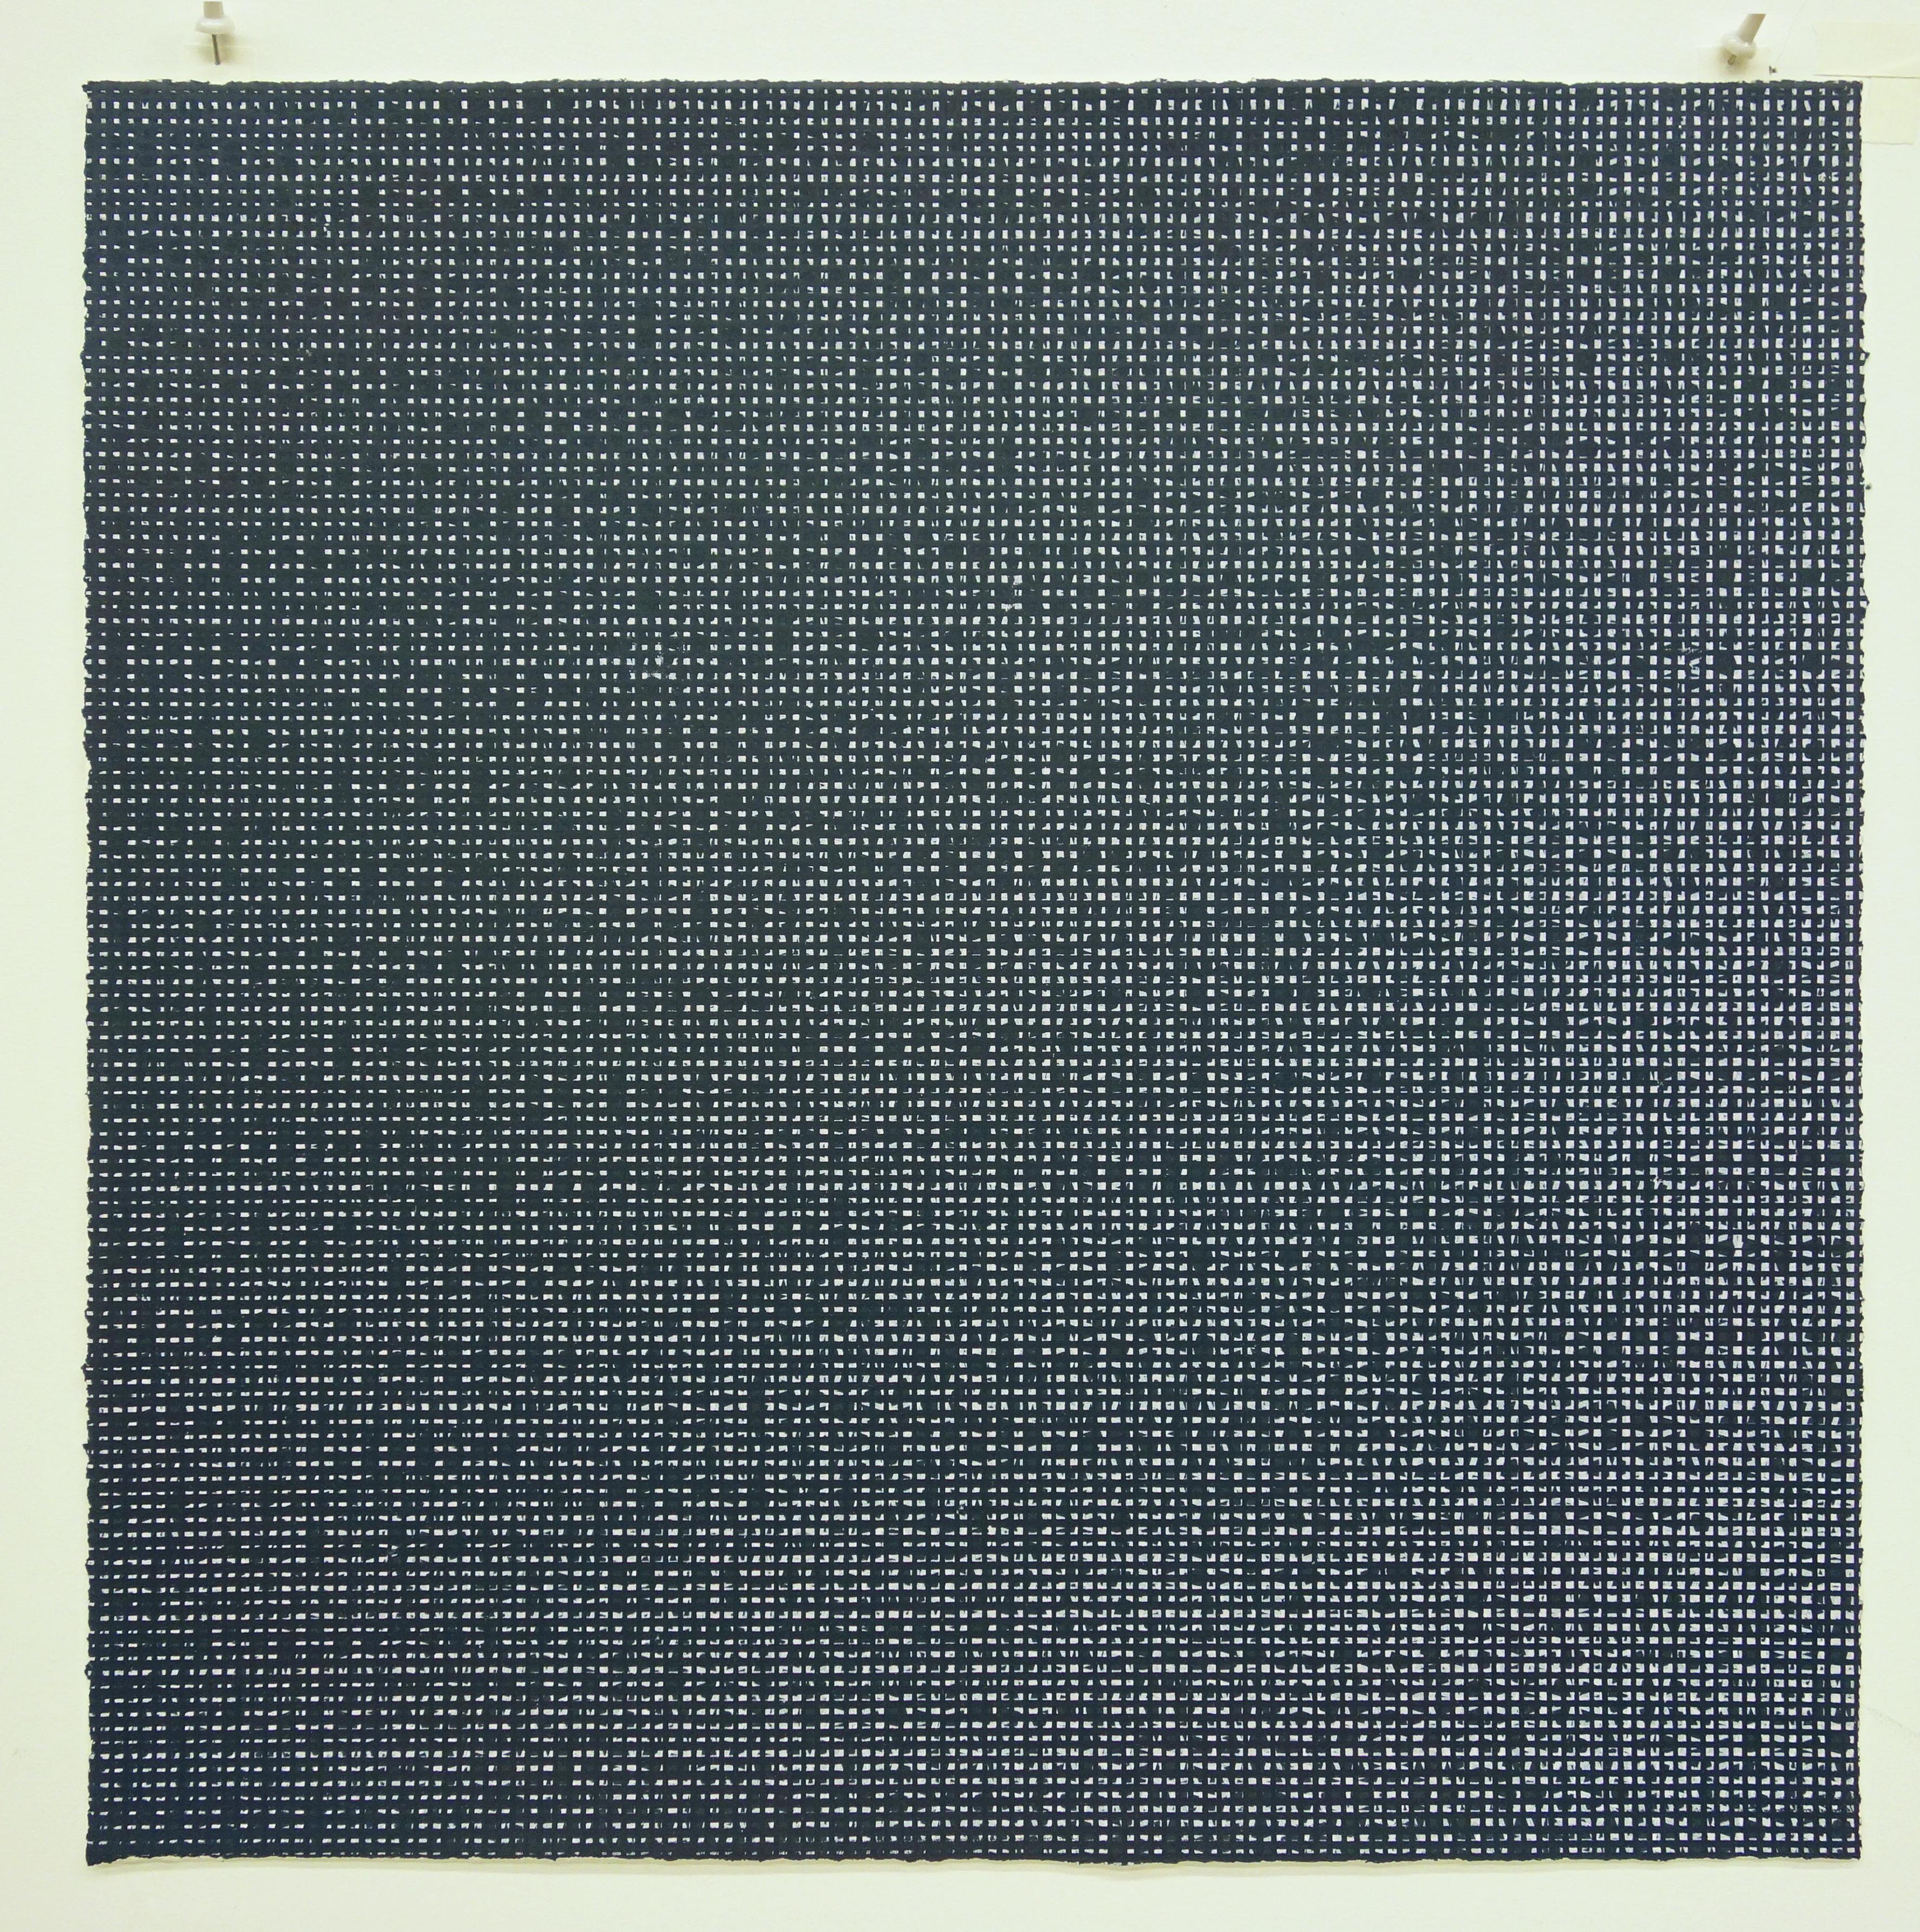 Rob de Oude, Untitled-Wassaic 10, 2016, silkscreen, 18 x 18 inches, Suite of 10 6